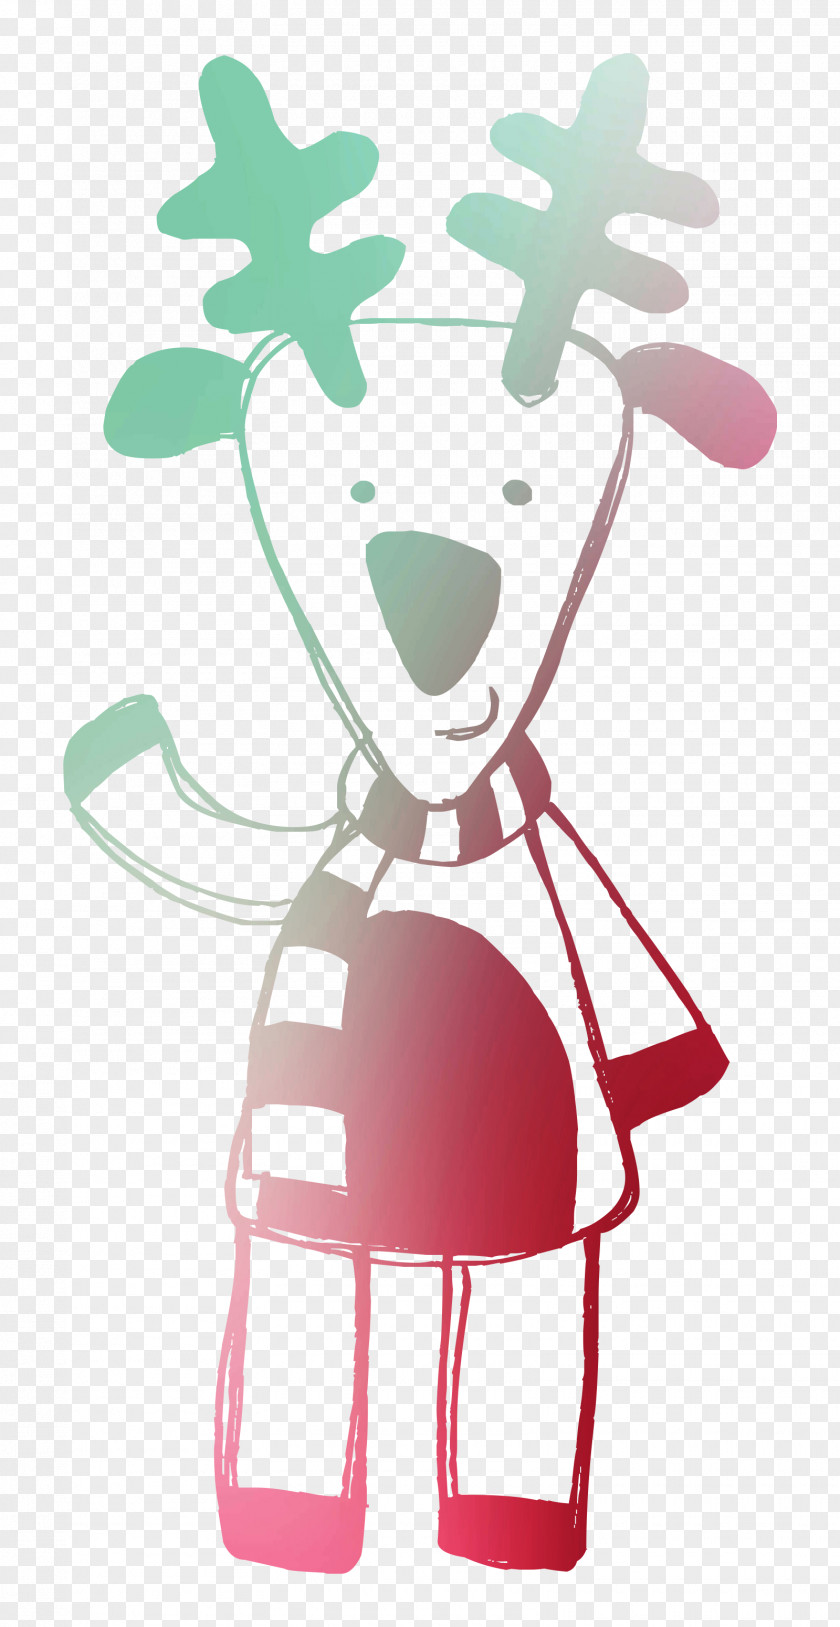 Reindeer Illustration Clip Art Product Design Character PNG